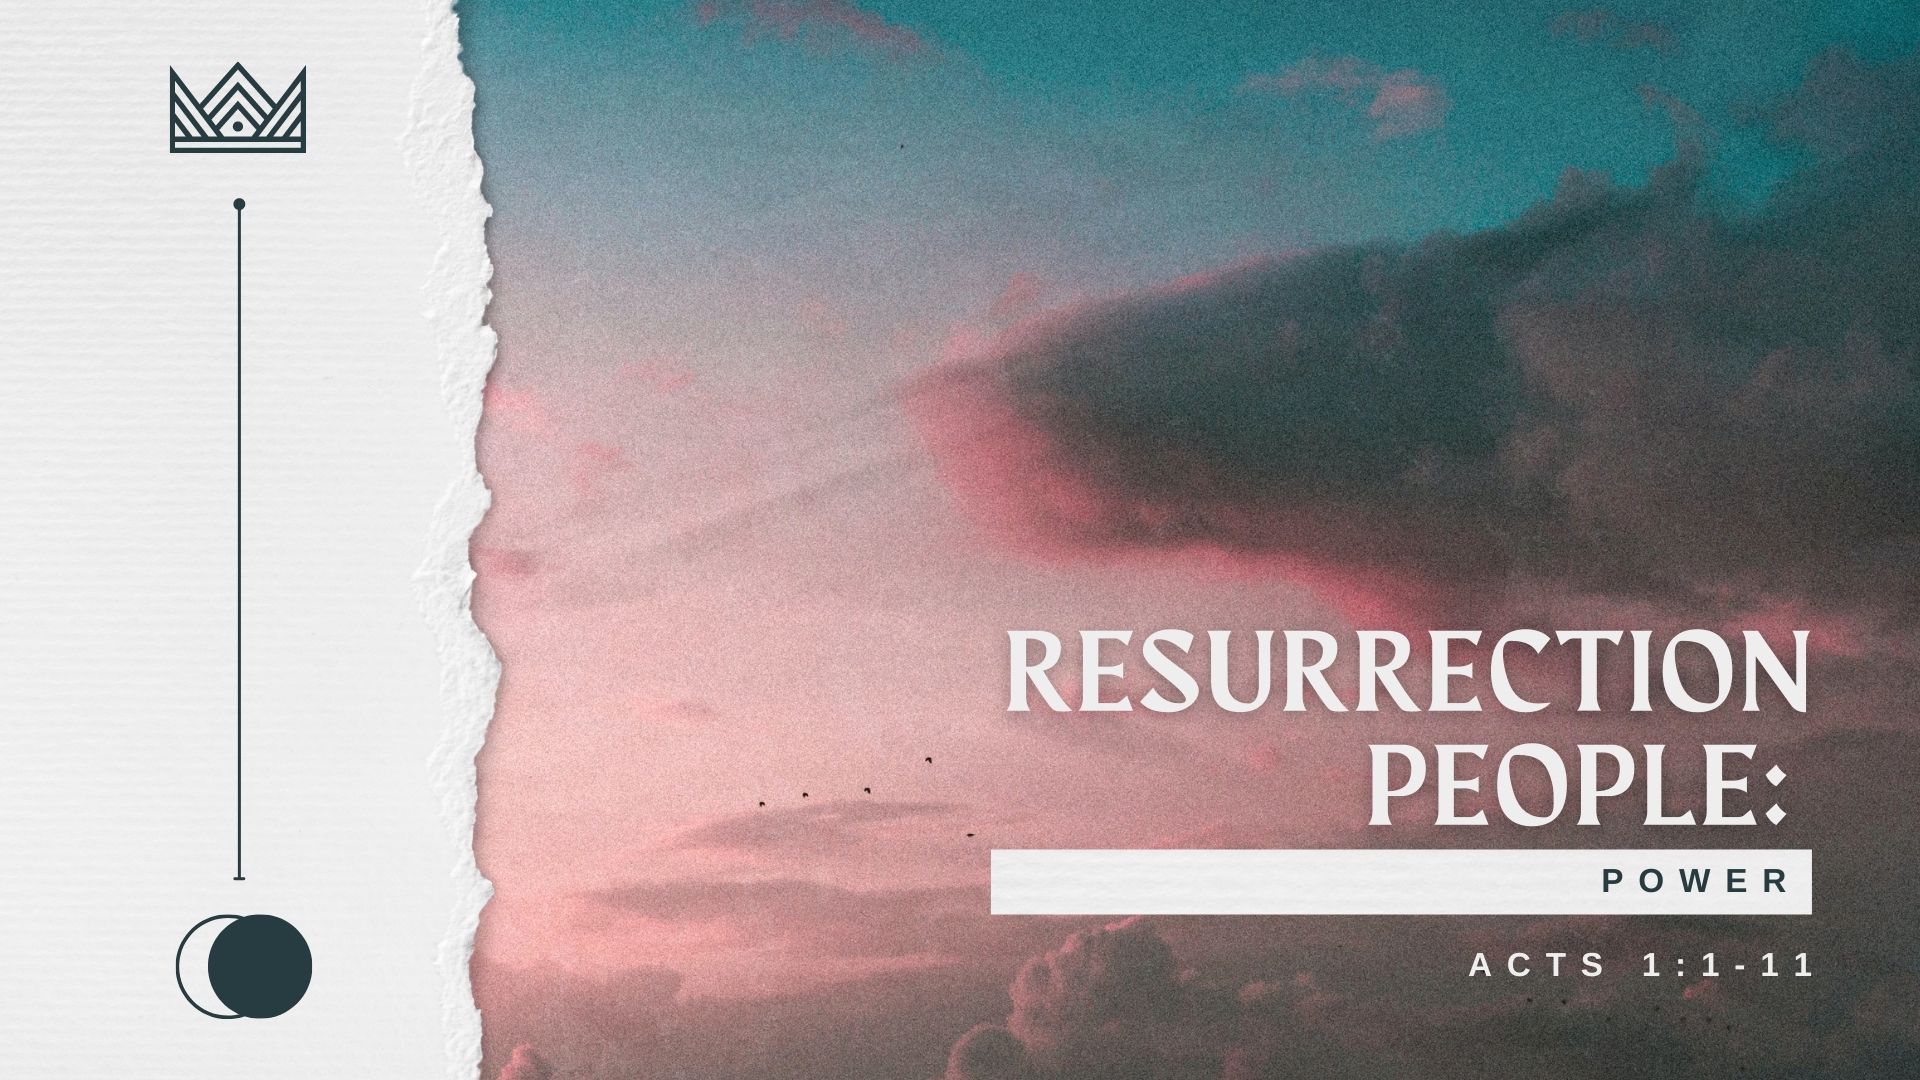 Resurrection People: Power